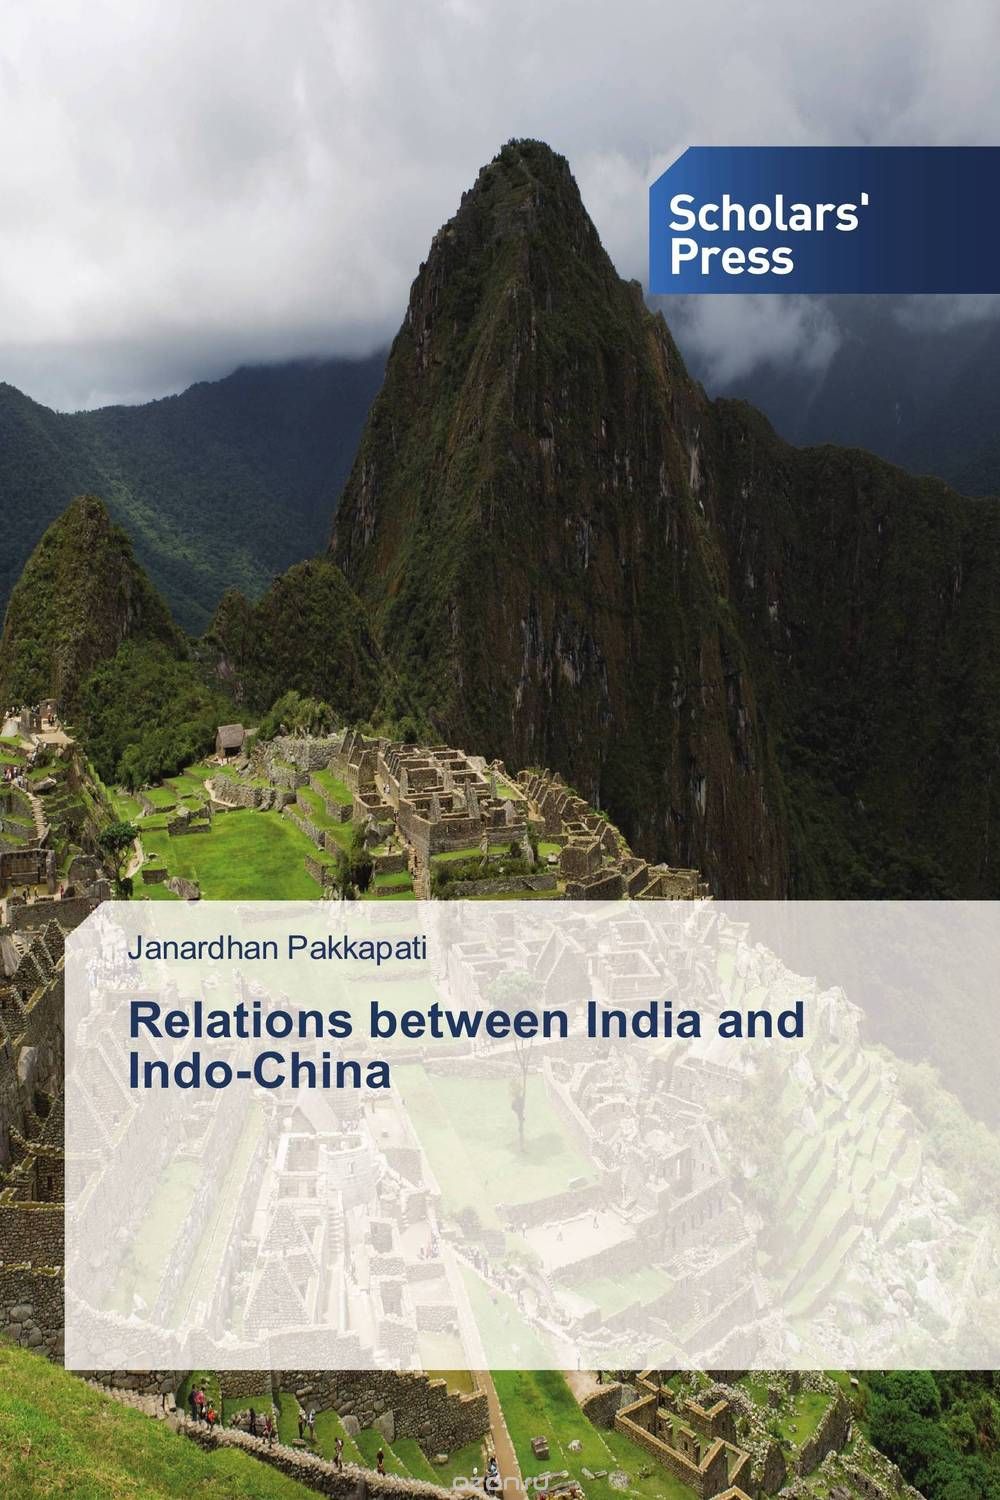 Скачать книгу "Relations between India and Indo-China"